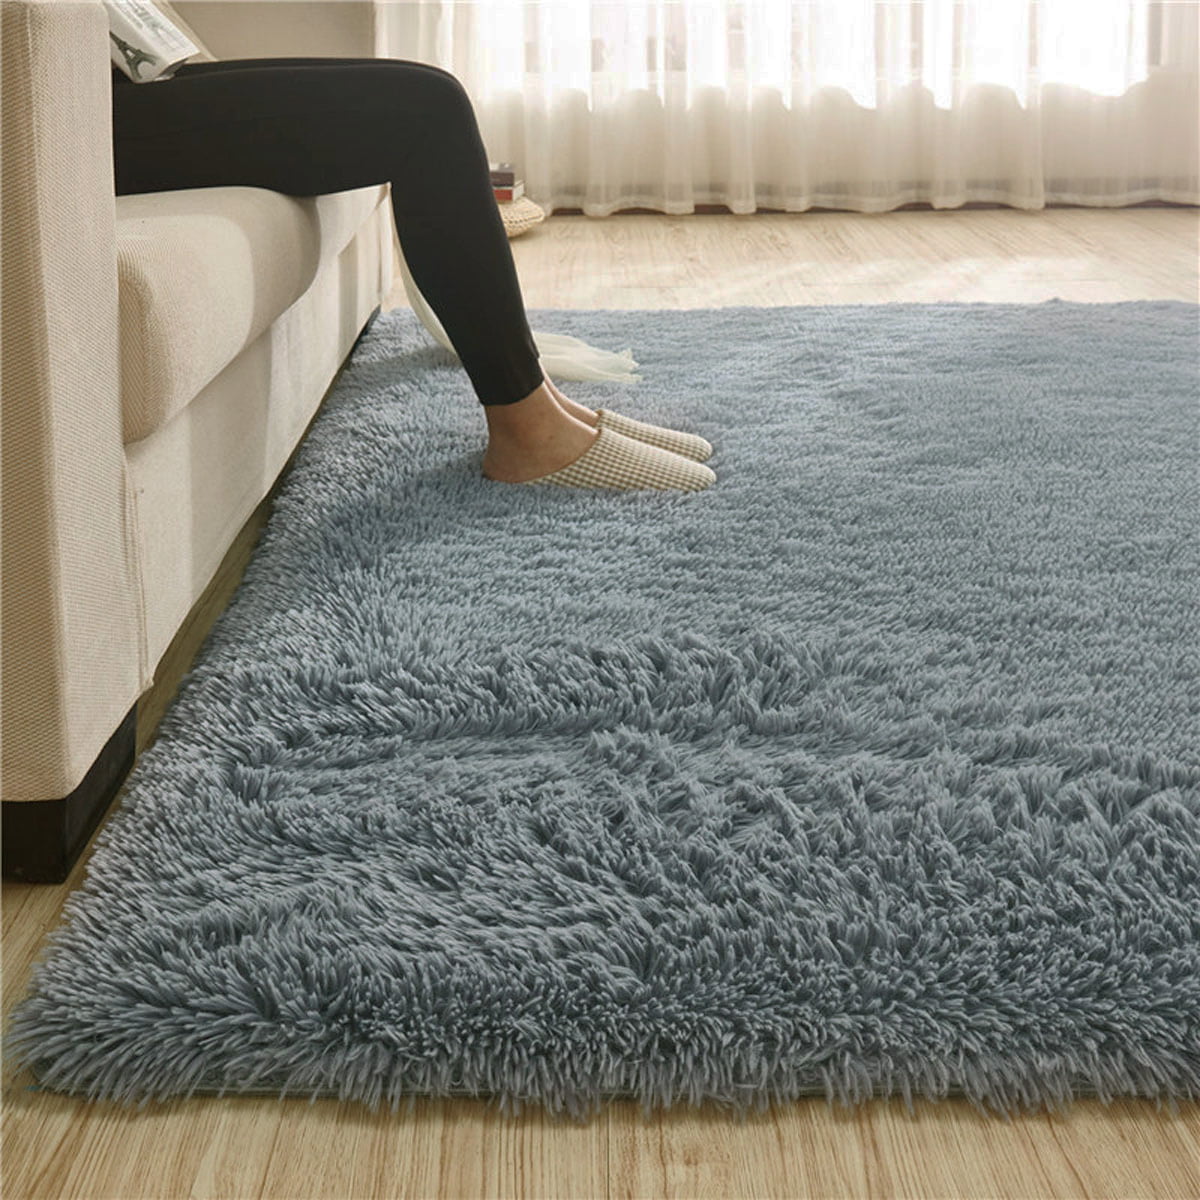 Super Soft Fluff Rug for Living Room Carpet for Bedroom Home Decor Kids Play Room Nursery Rug 3 Feet x 5.3 Feet, Grey Color&Geometry Morden Soft Area Rugs 